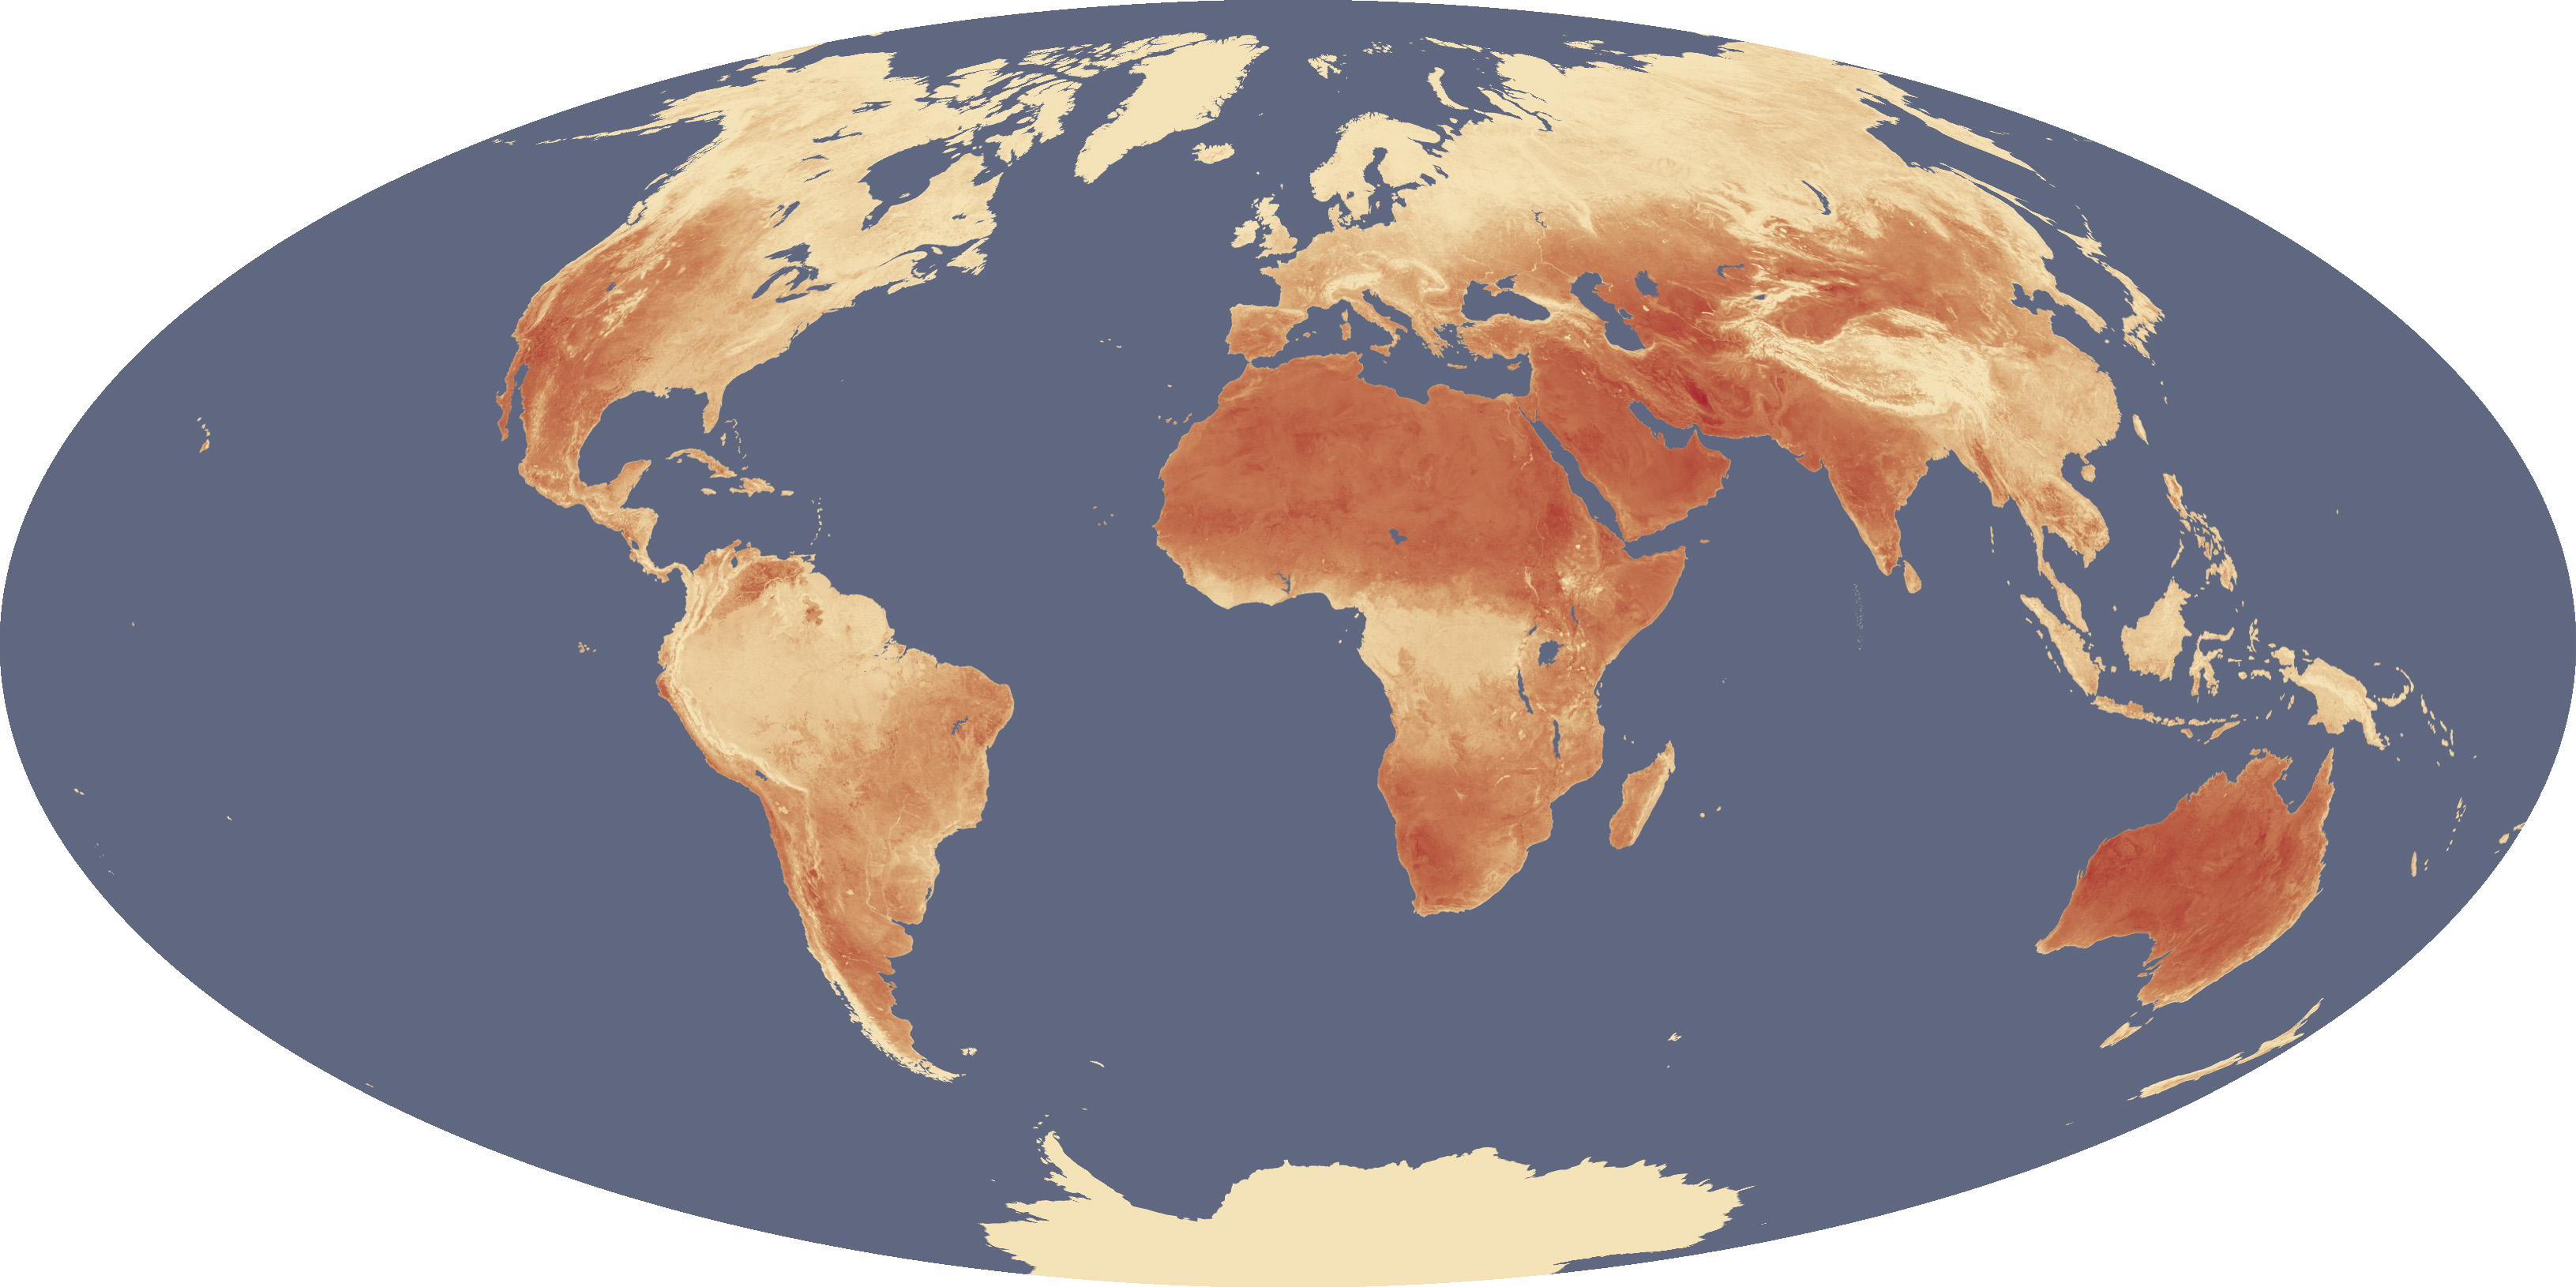 earth nasa satellite mapping